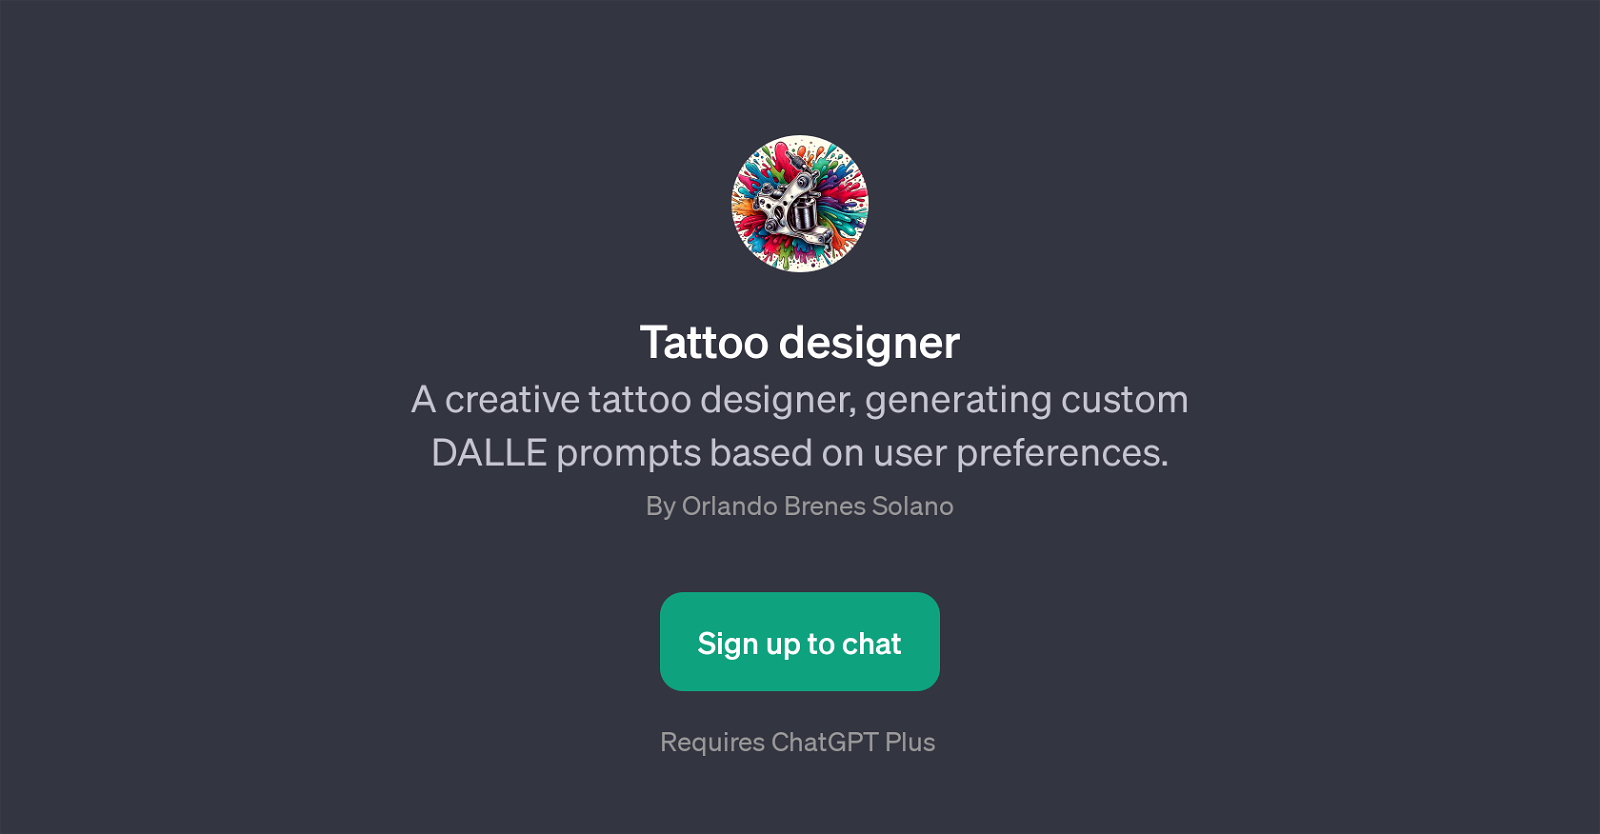 Tattoo designer website